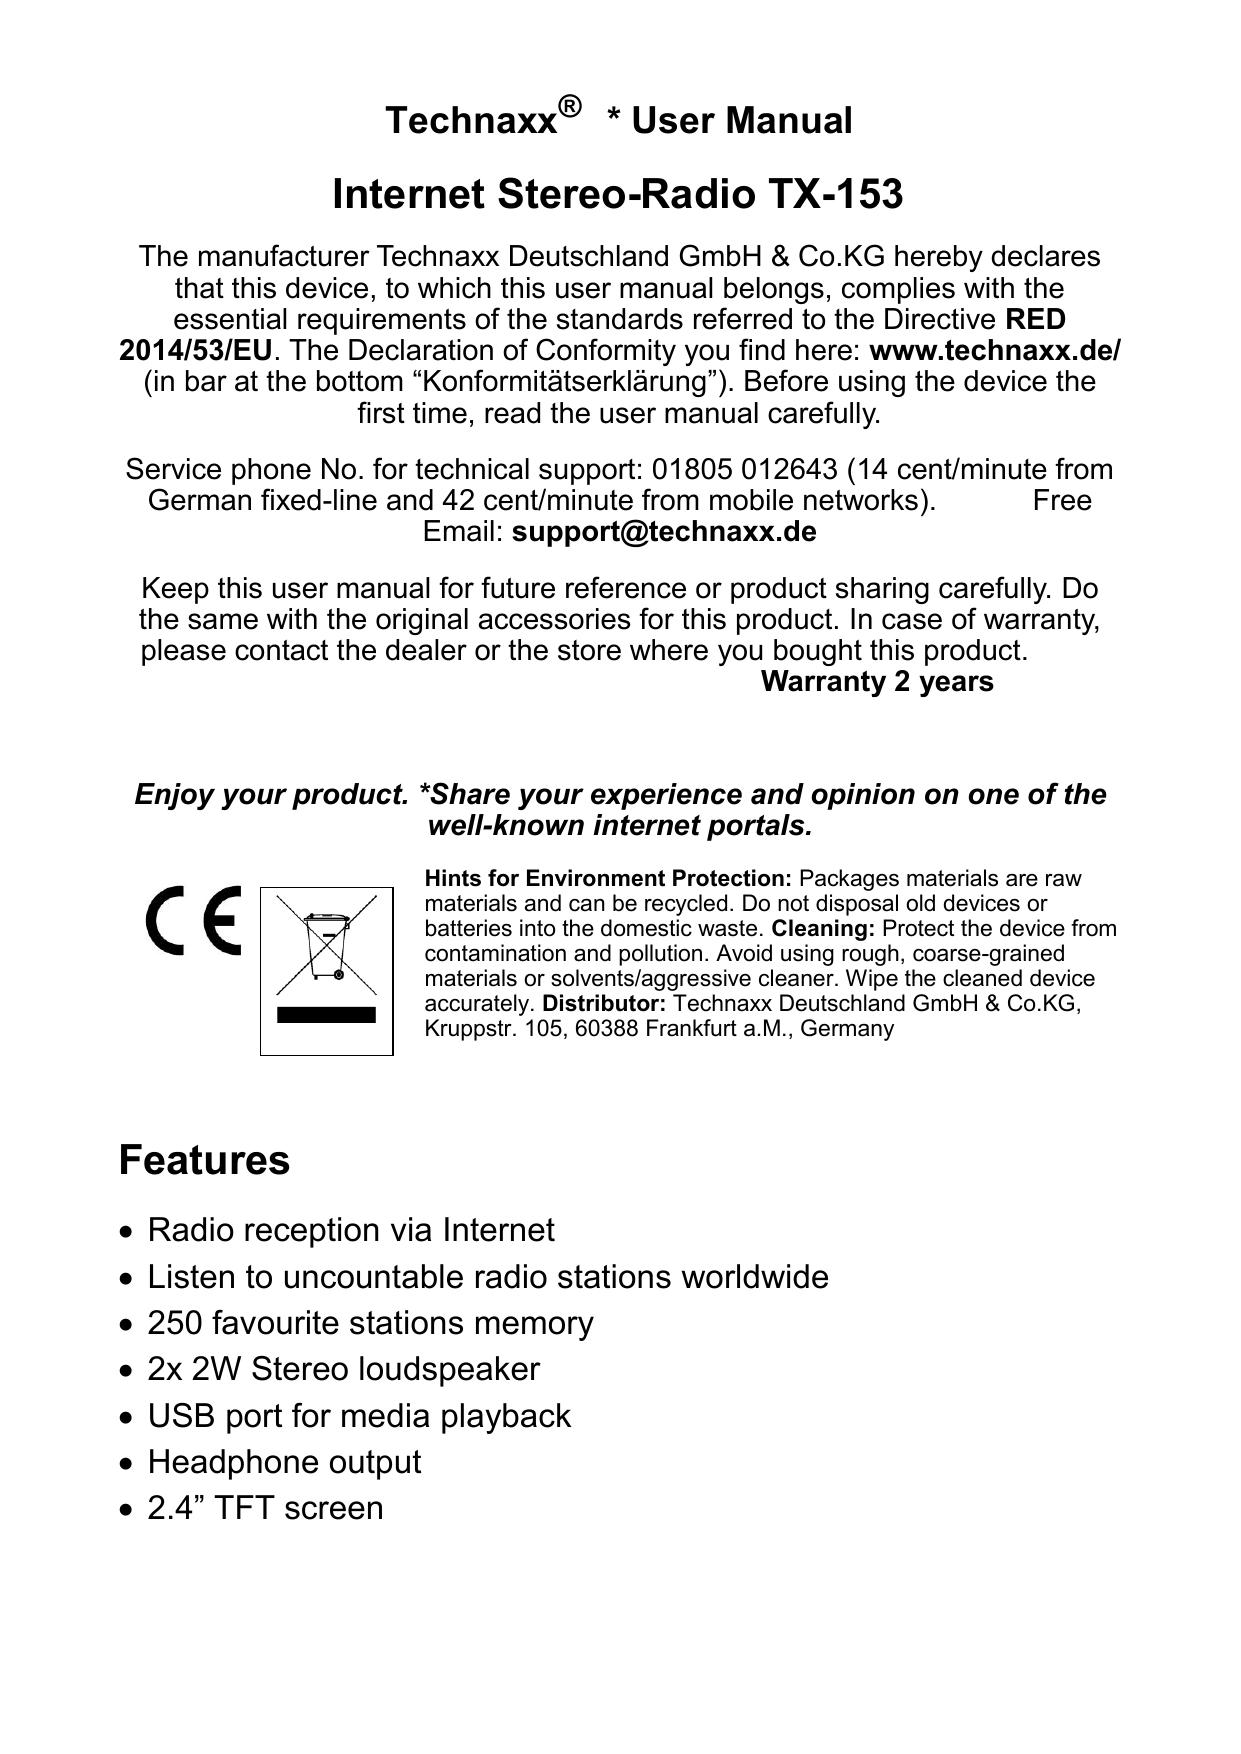 Technaxx TX-153 Owner\'s | Manualzz Internetradio Manual